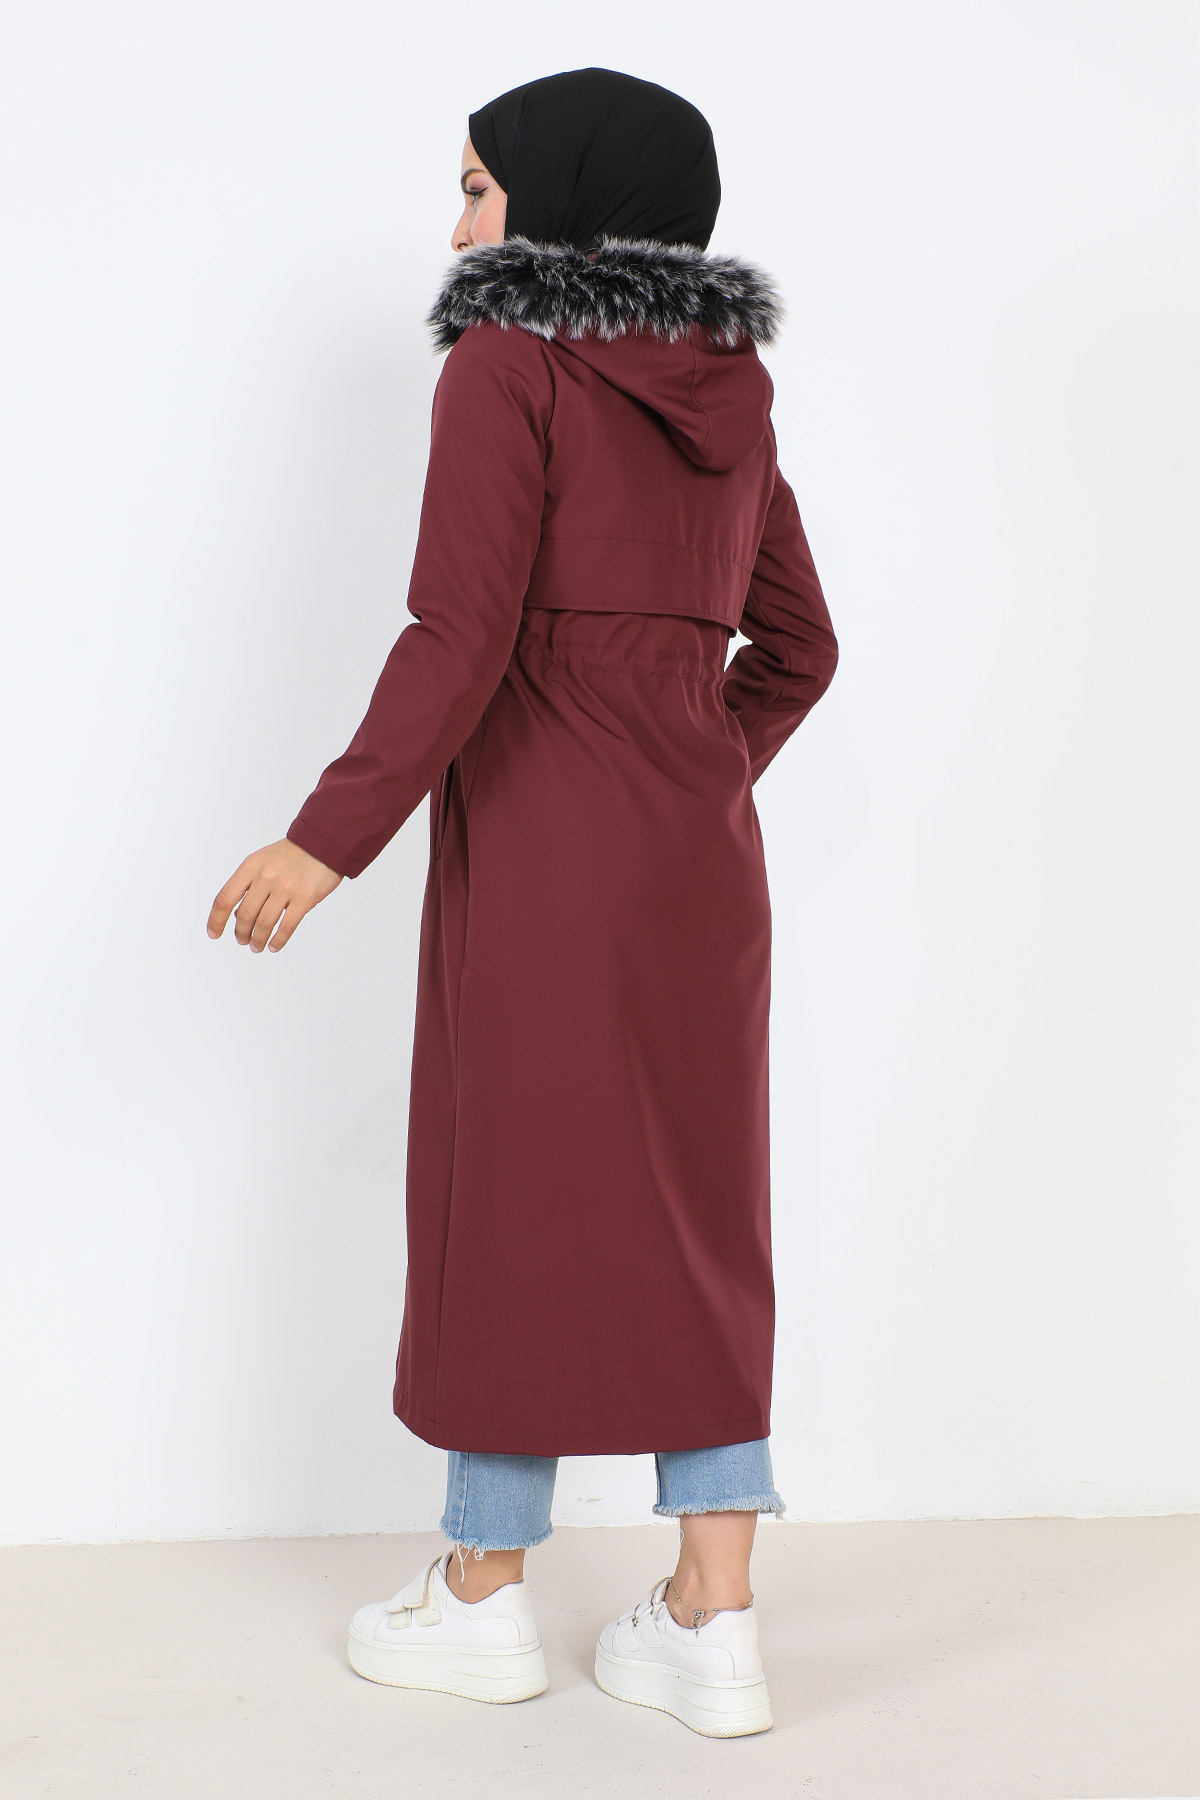 islamic long coats